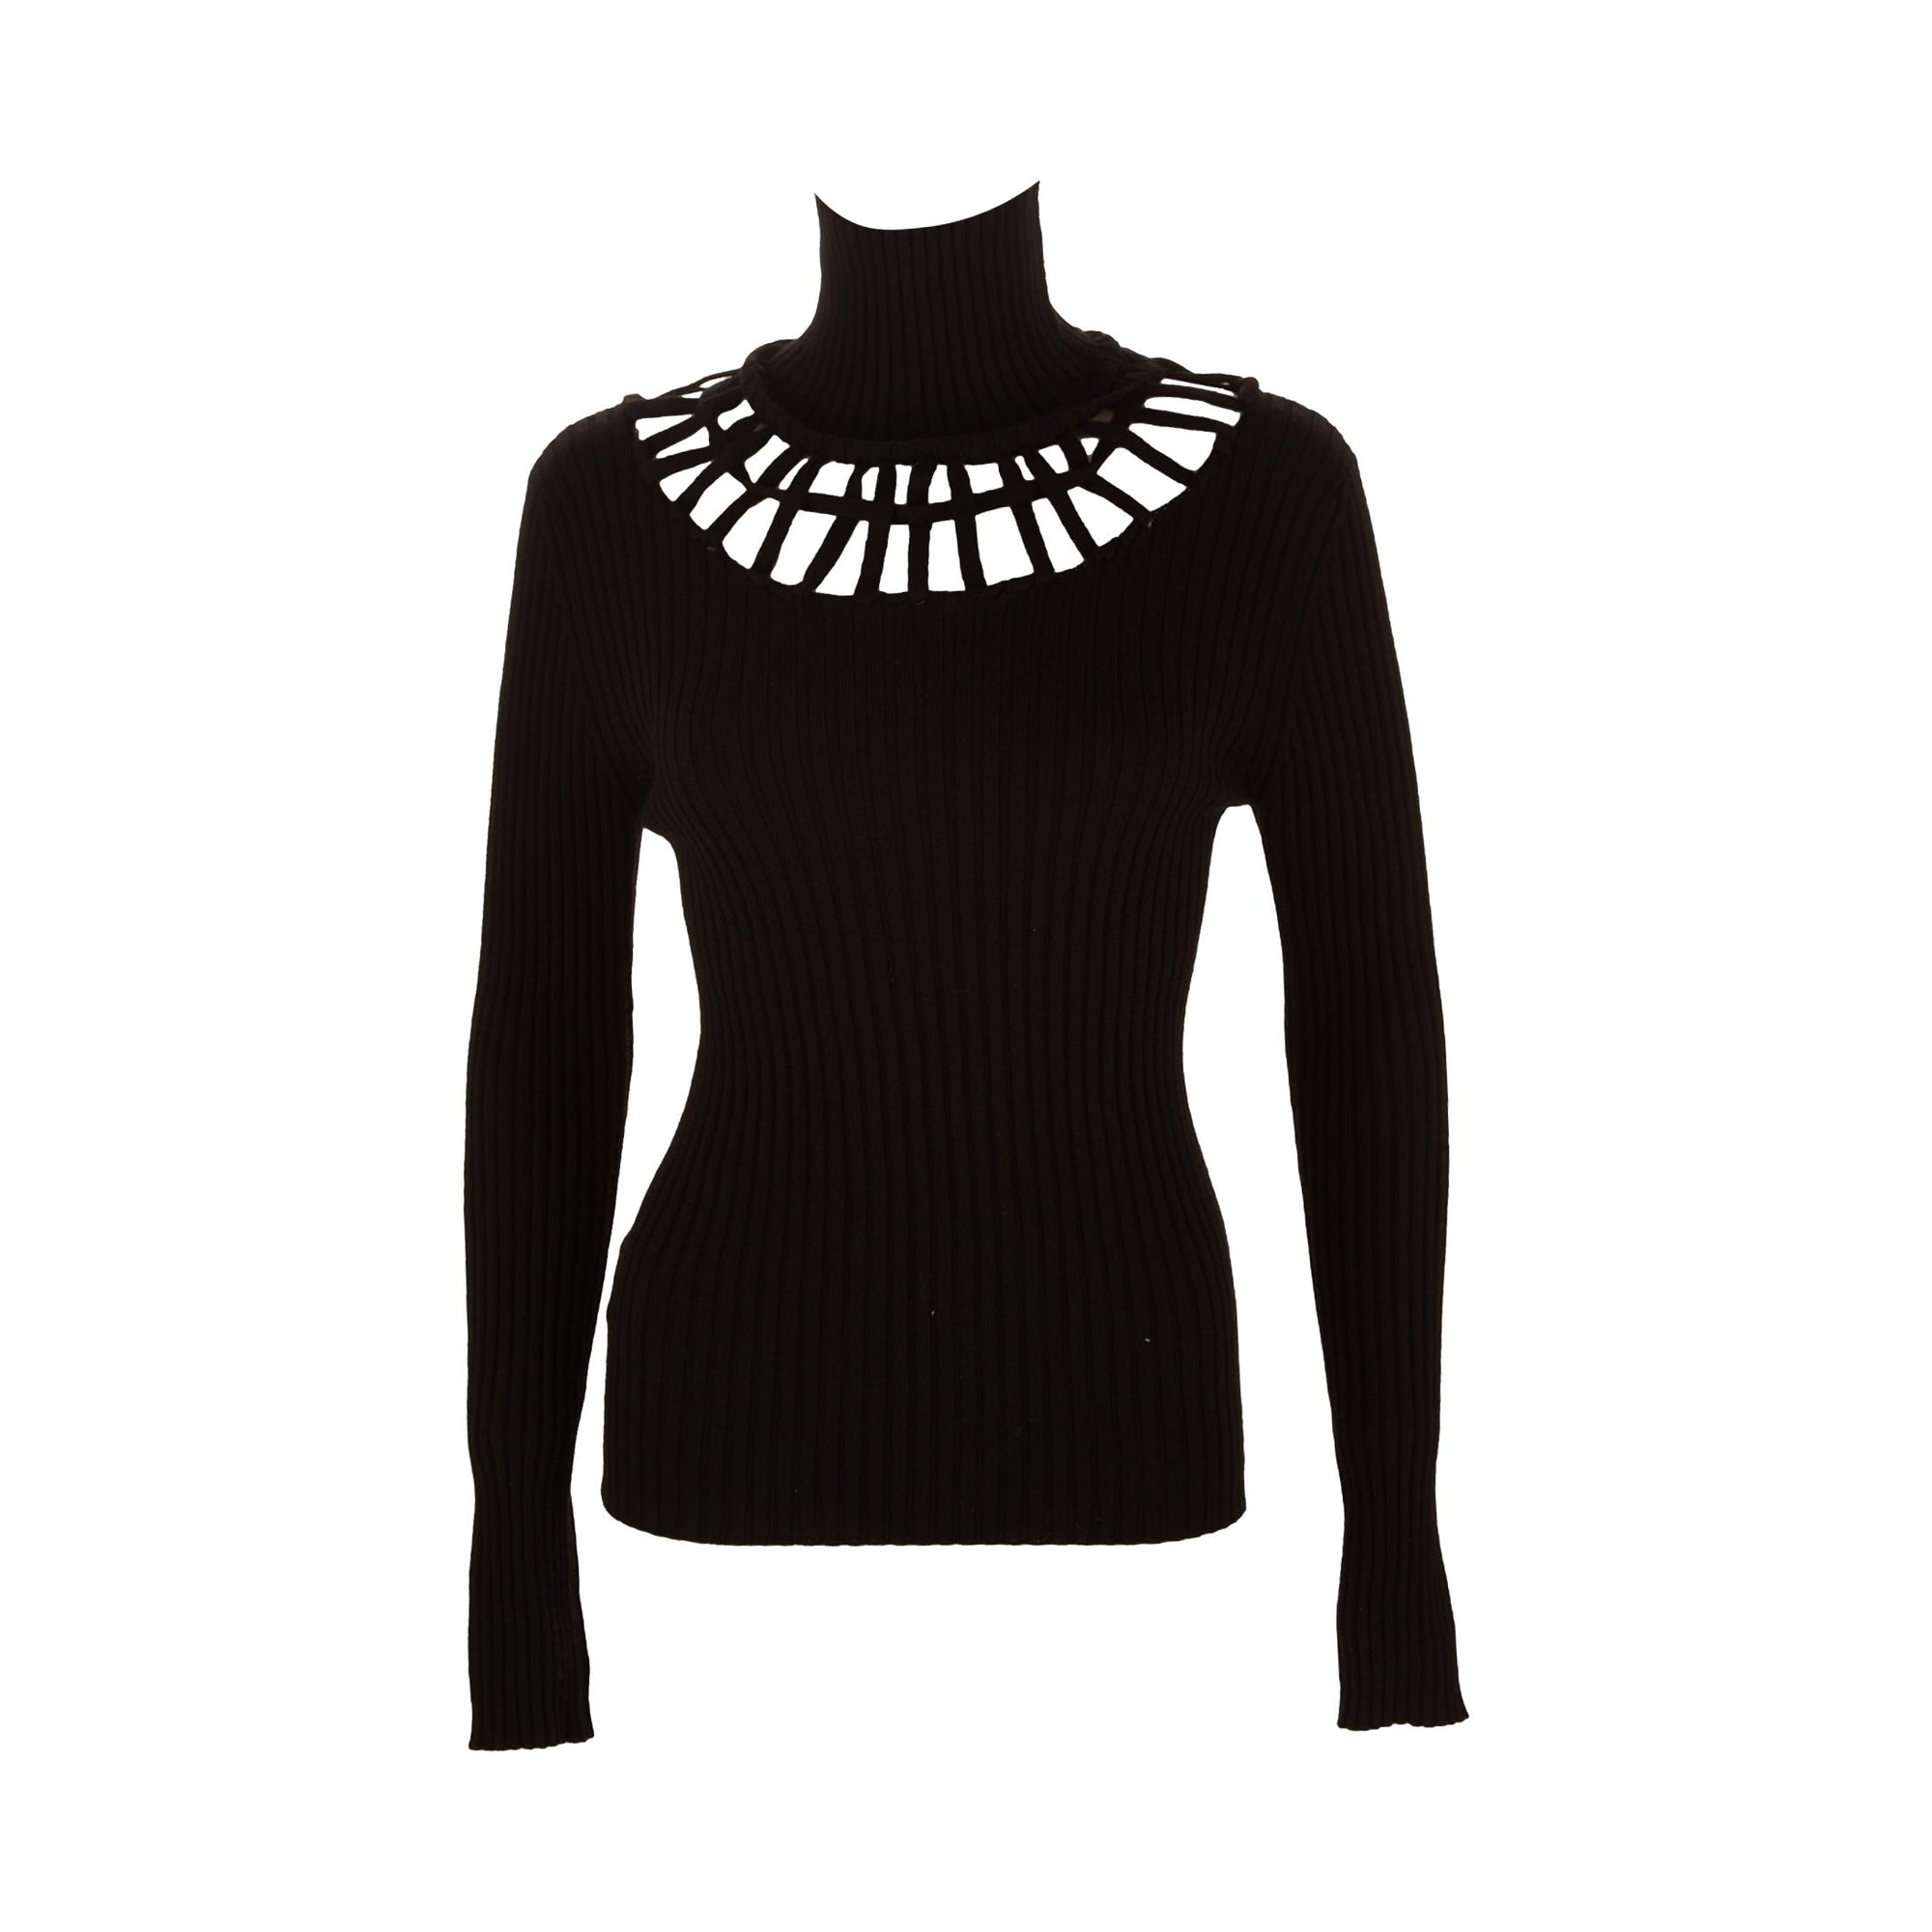 Jean Paul Gaultier Black Cutout Ribbed Sweater